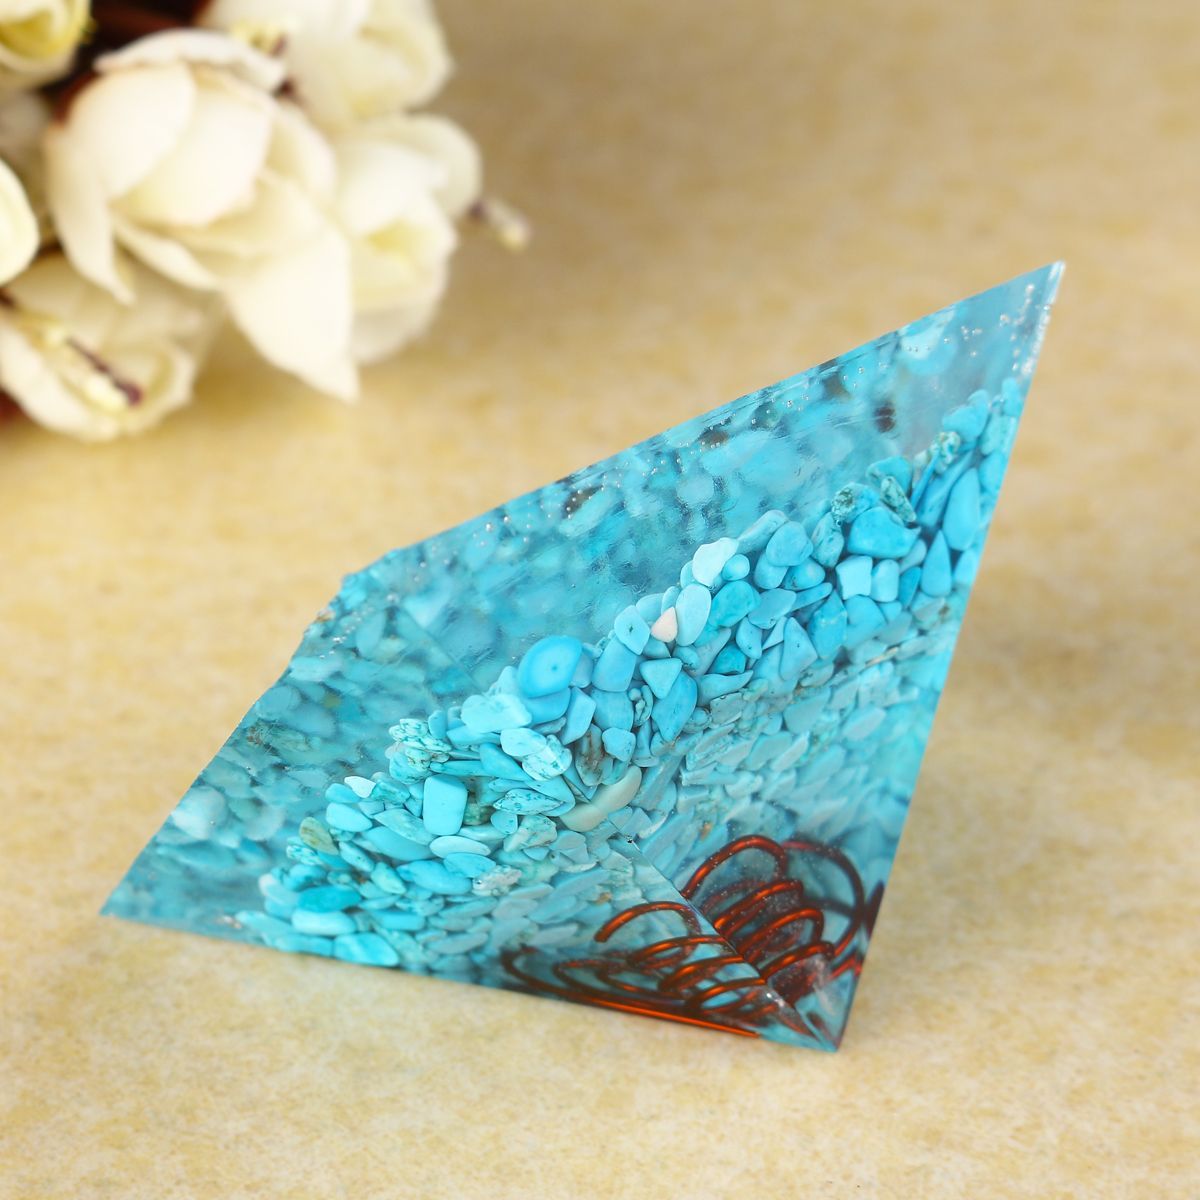 Pyramid-Crystals-Gemstone-Meditation-Yoga-Energy-Generator-Healing-Stone-Decor-1425128